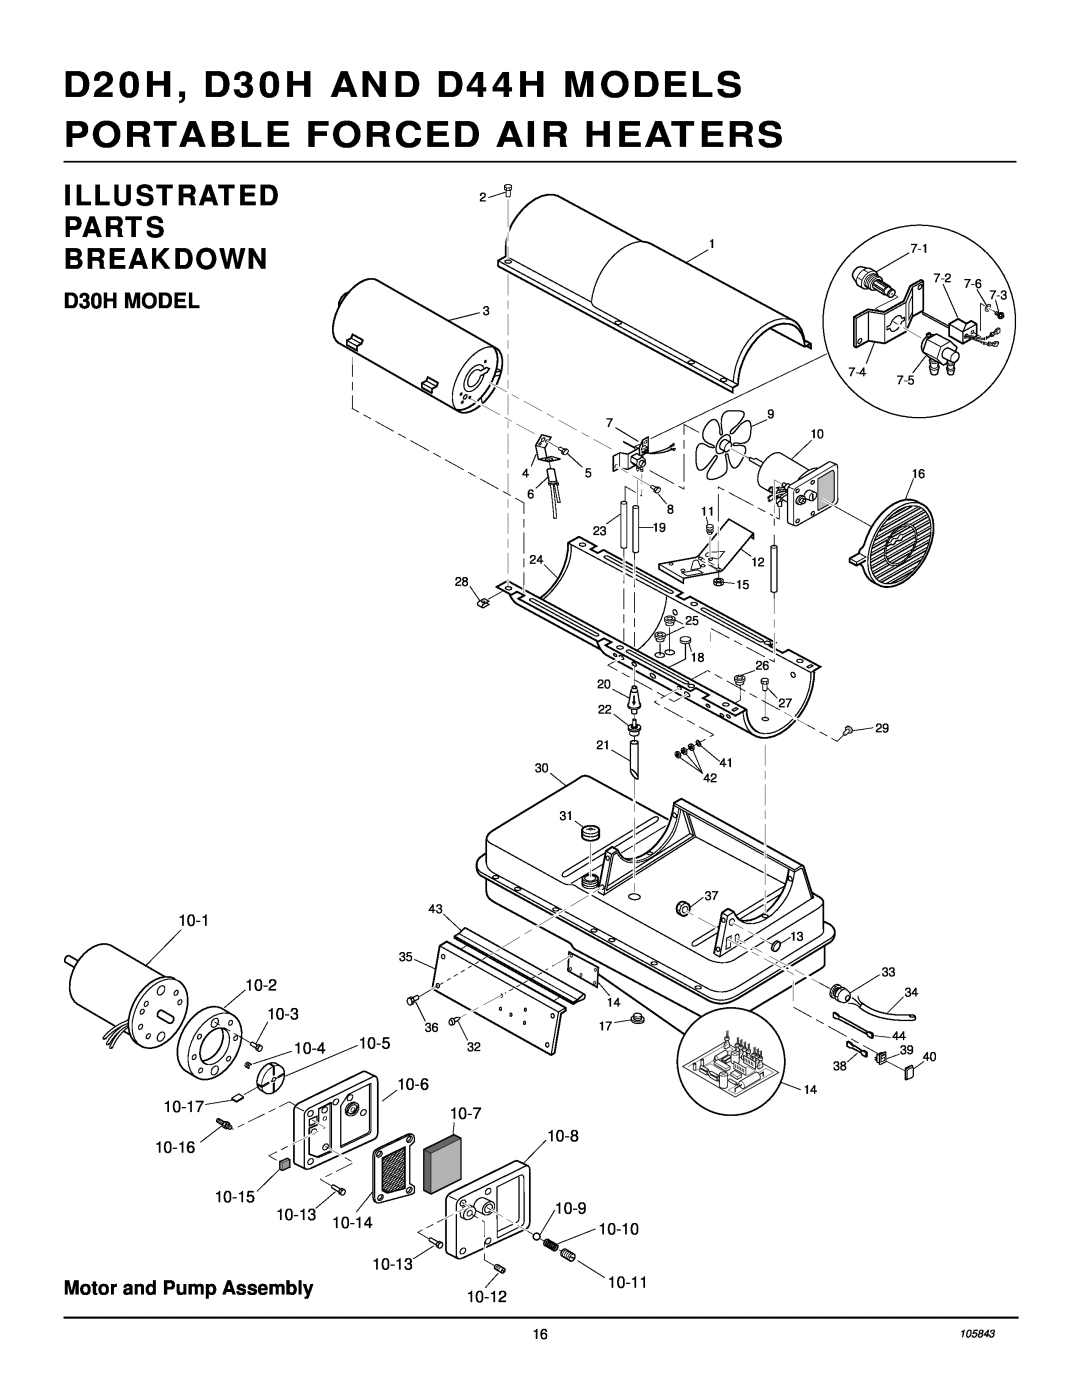 Desa D44H, D20H owner manual D30H MODEL, Illustrated Parts Breakdown 